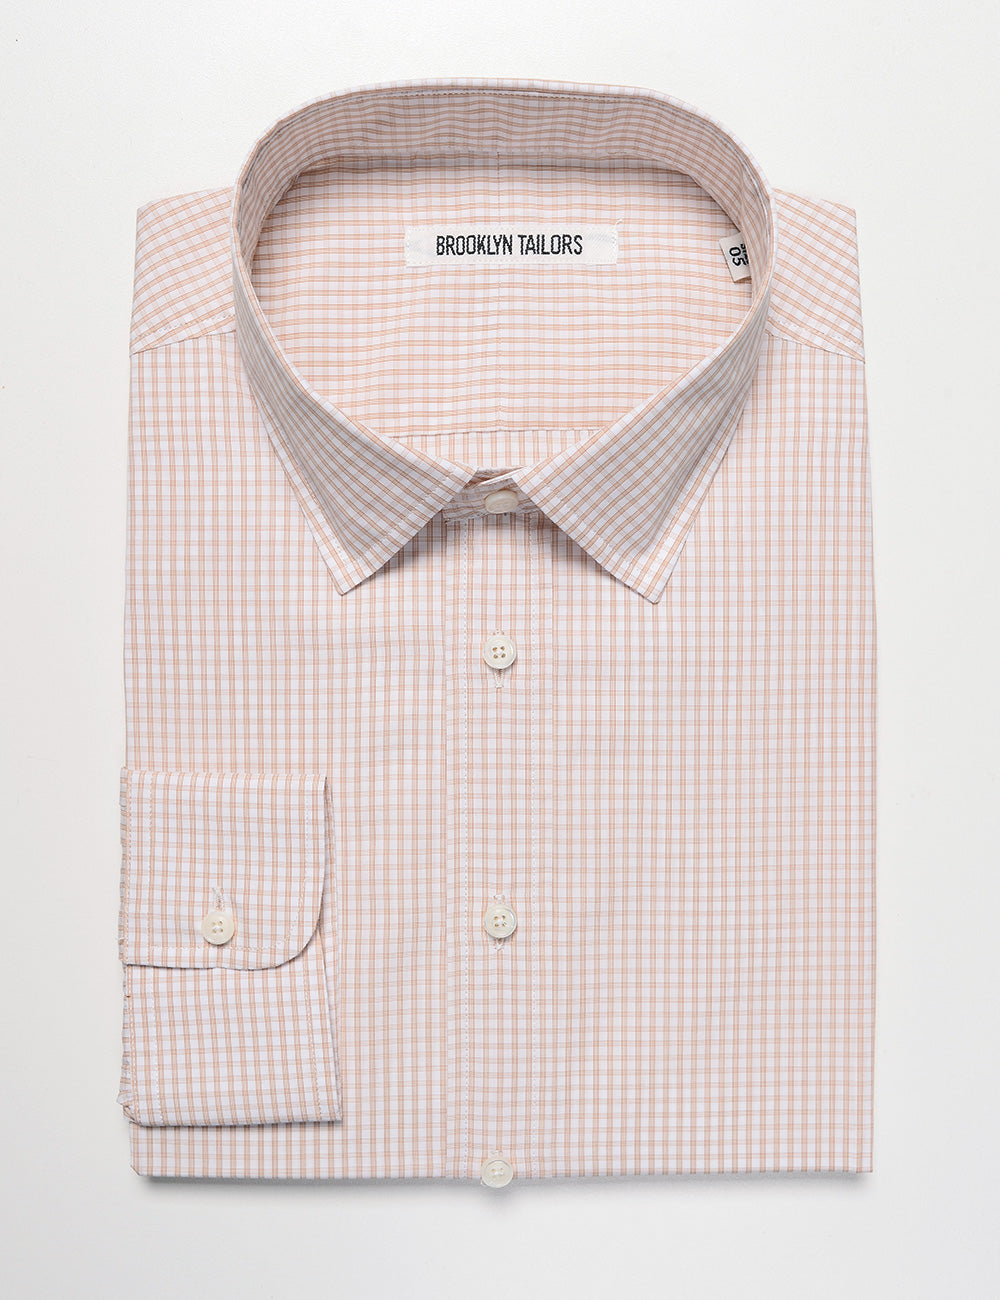 BKT20 Slim Dress Shirt in Micro Check - White / Espresso